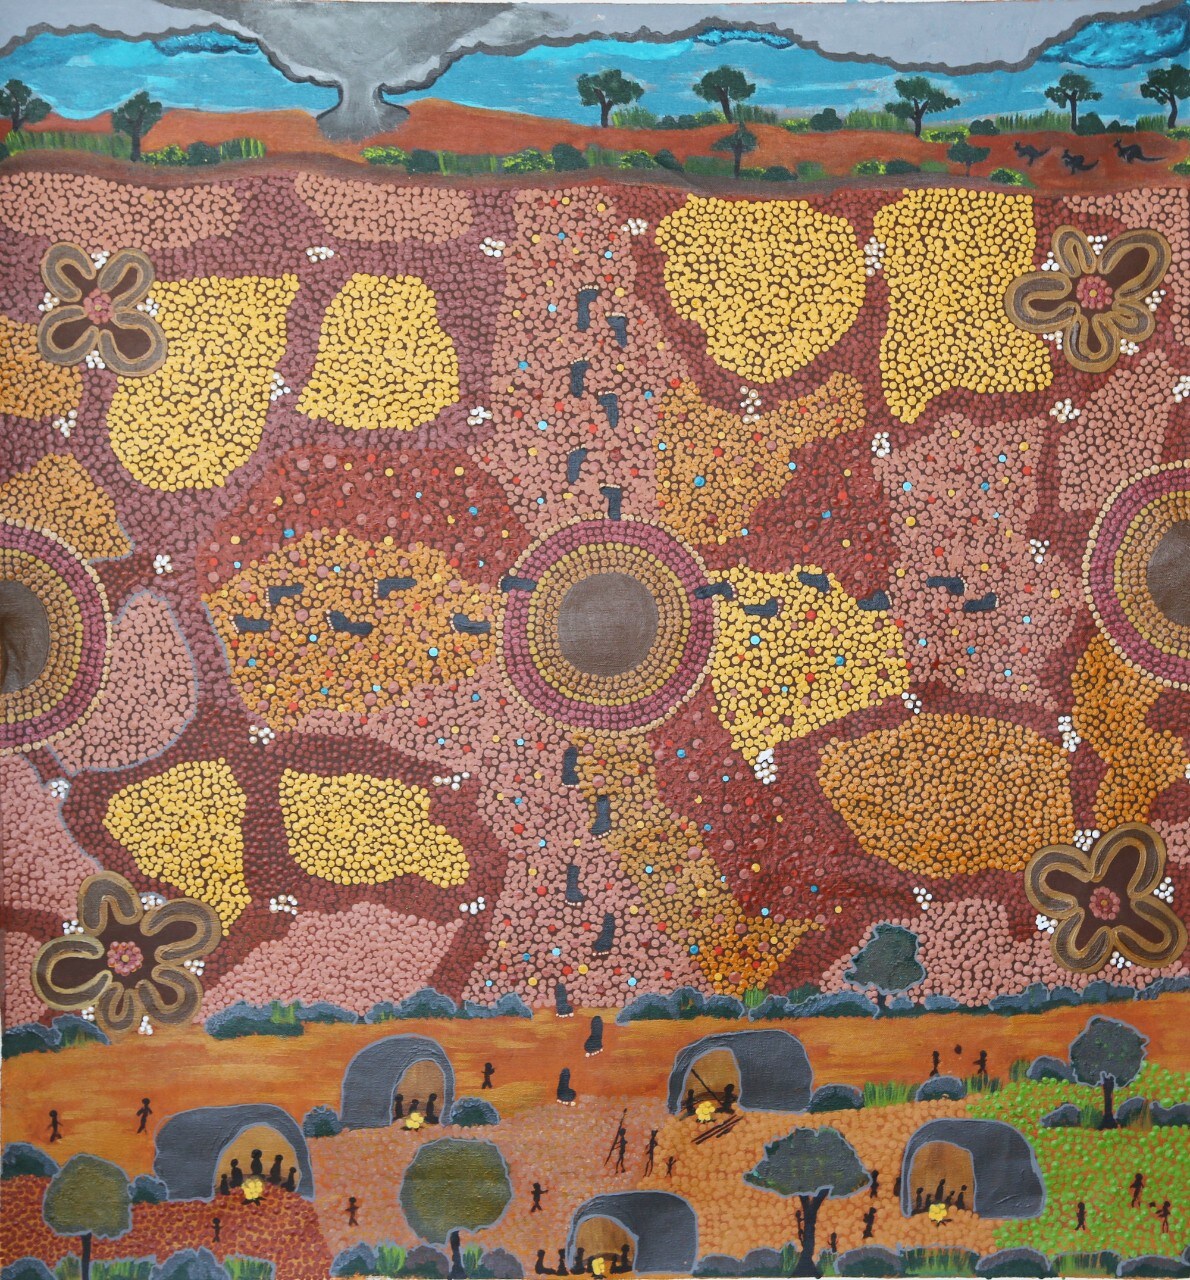 An Aboriginal art potraying a nuclear refuge camp by Glenda Ken